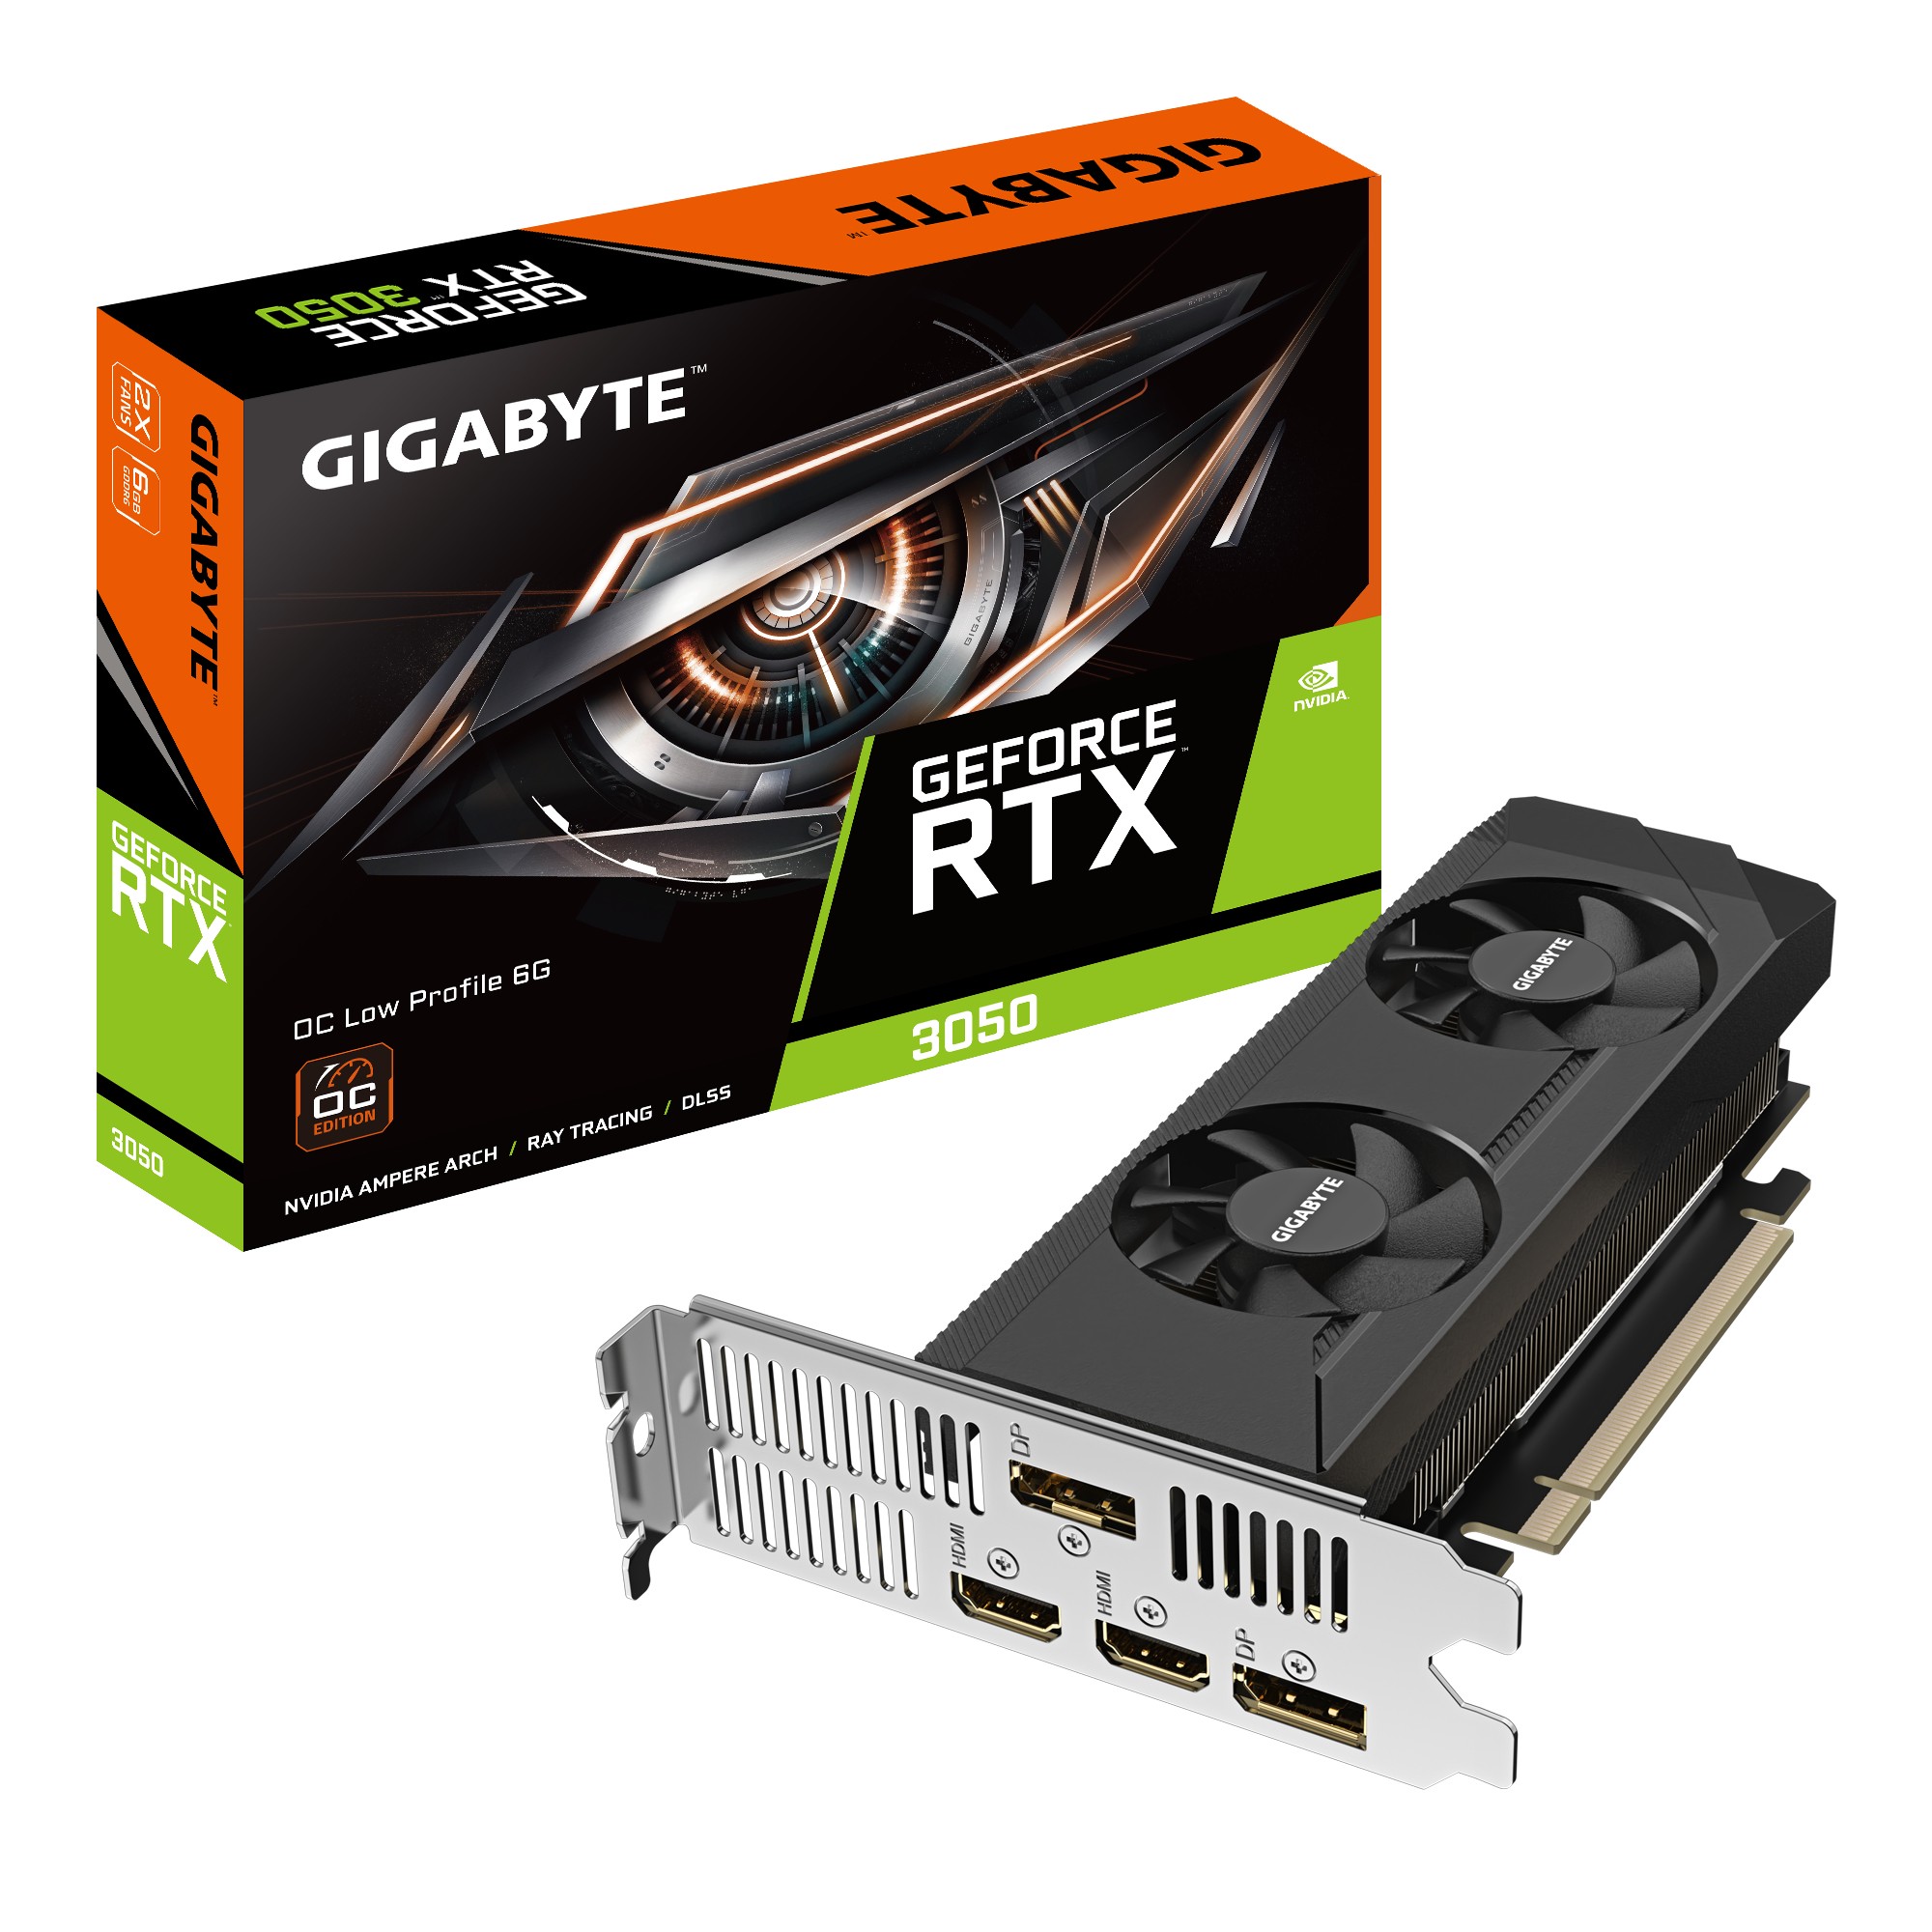 VGA Gigabyte GeForce RTX 3050 6GB OC Low Profile